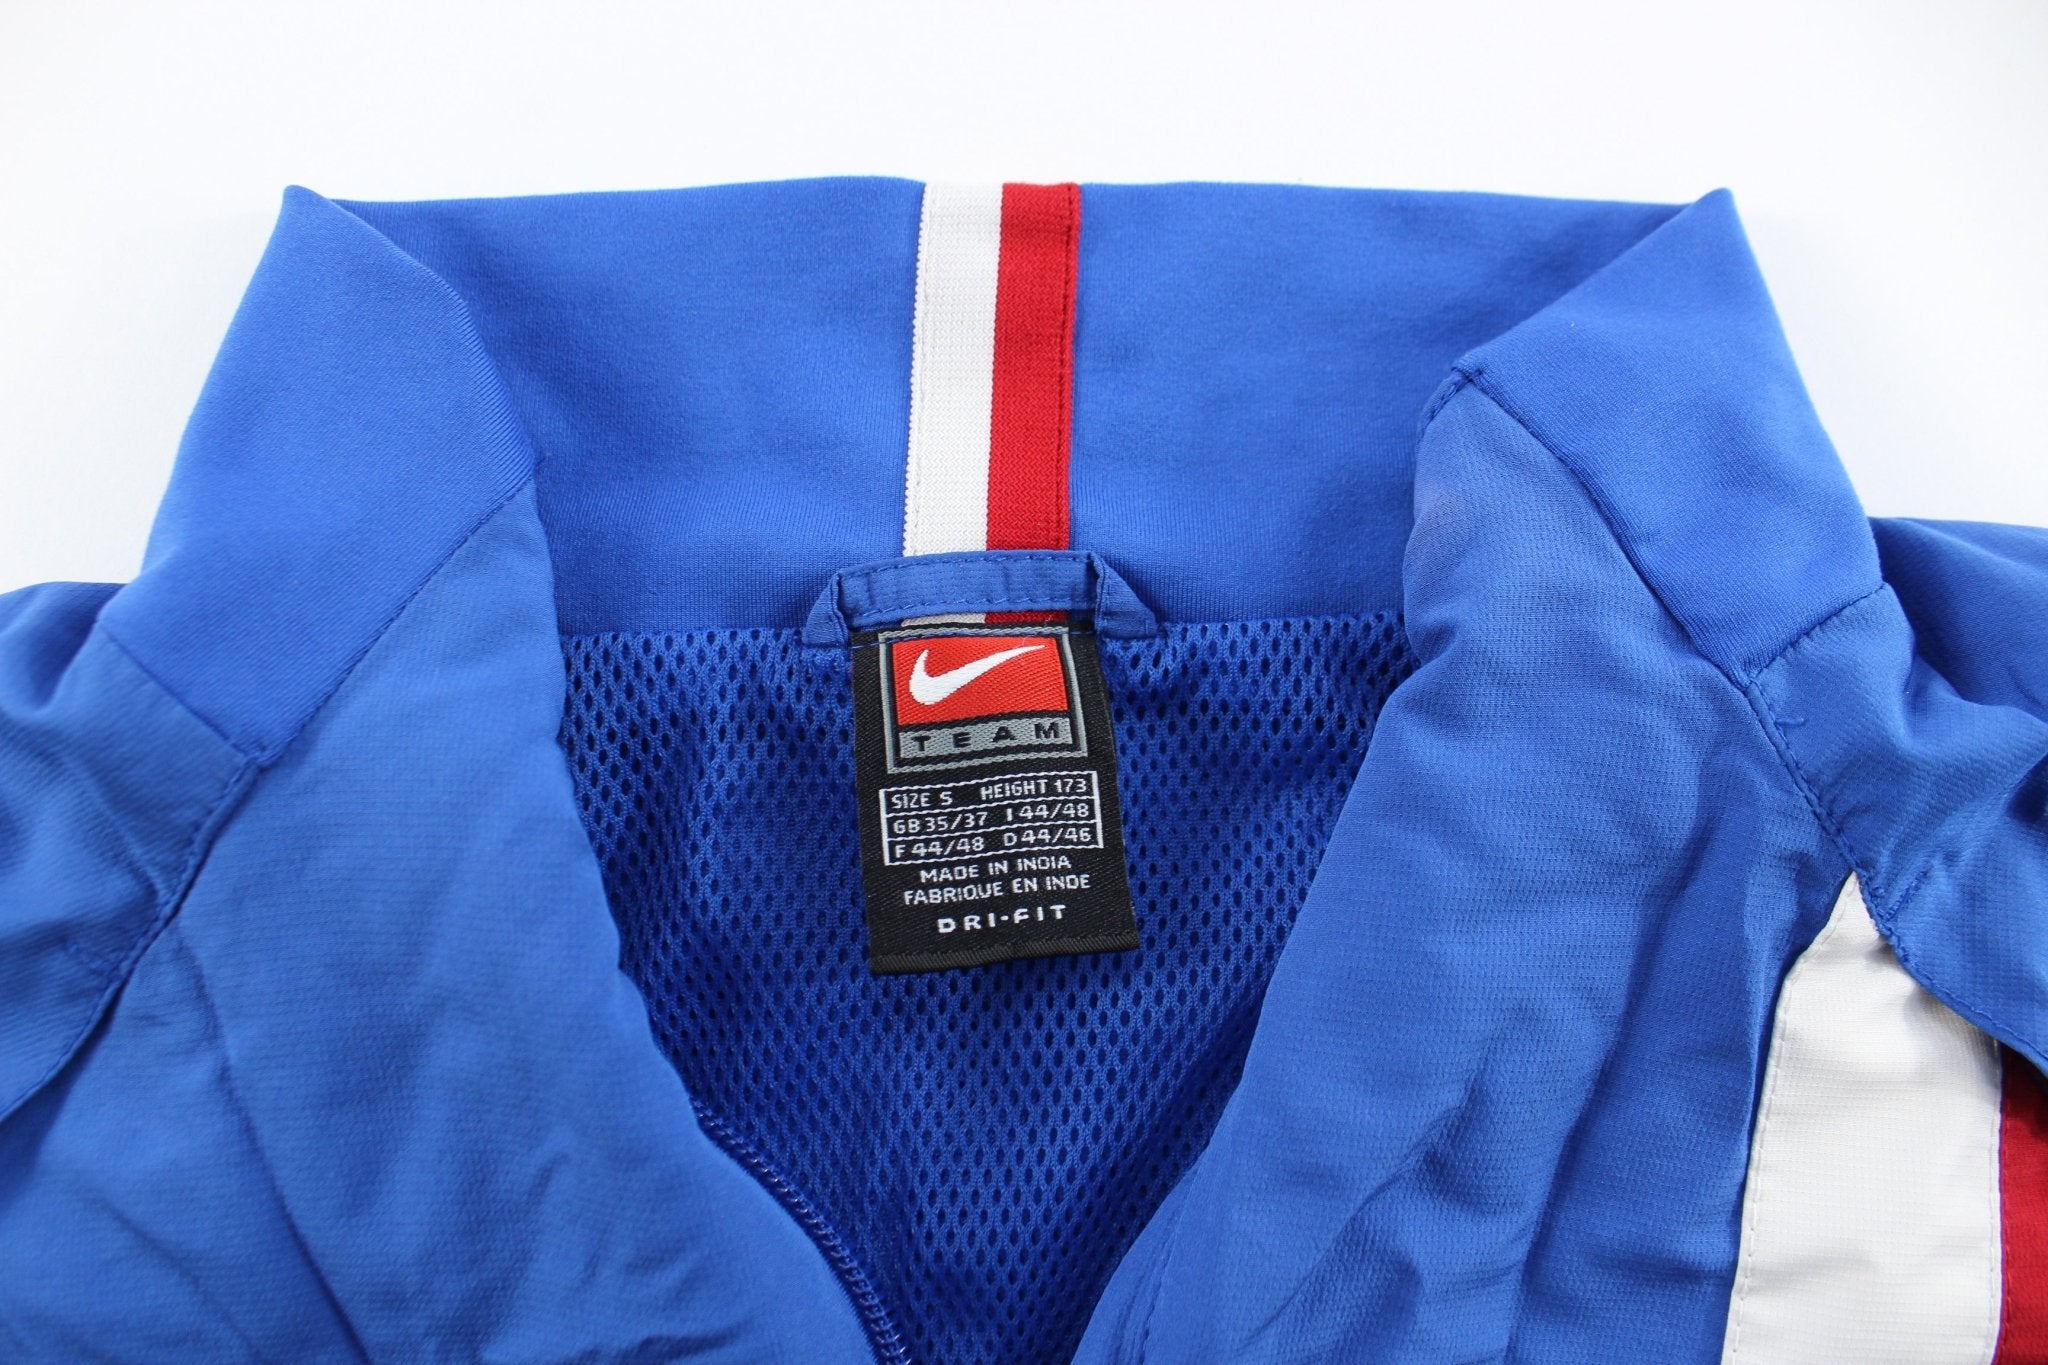 Nike Embroidered Logo USA Soccer Zip Up Jacket